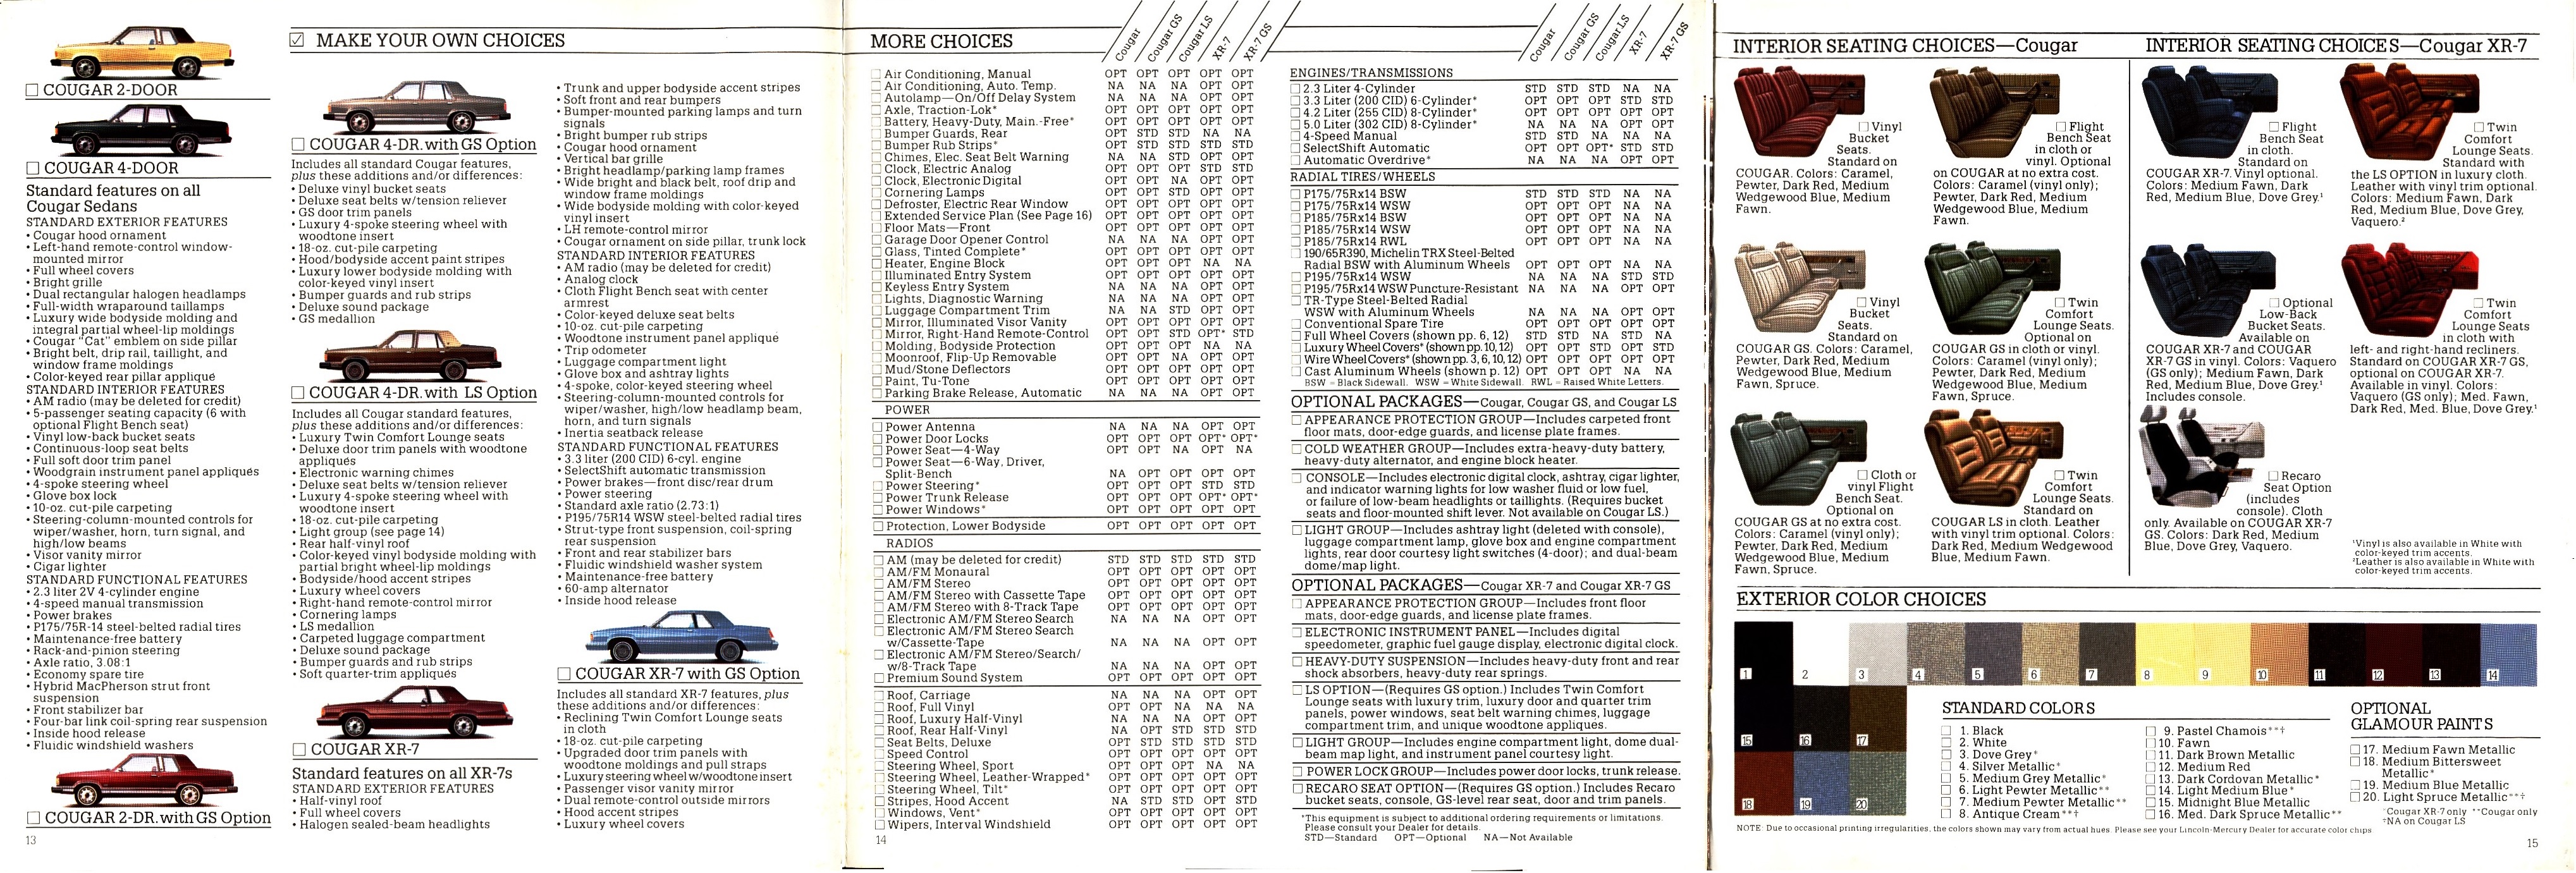 1981 Mercury Cougars Brochure-13-14-15